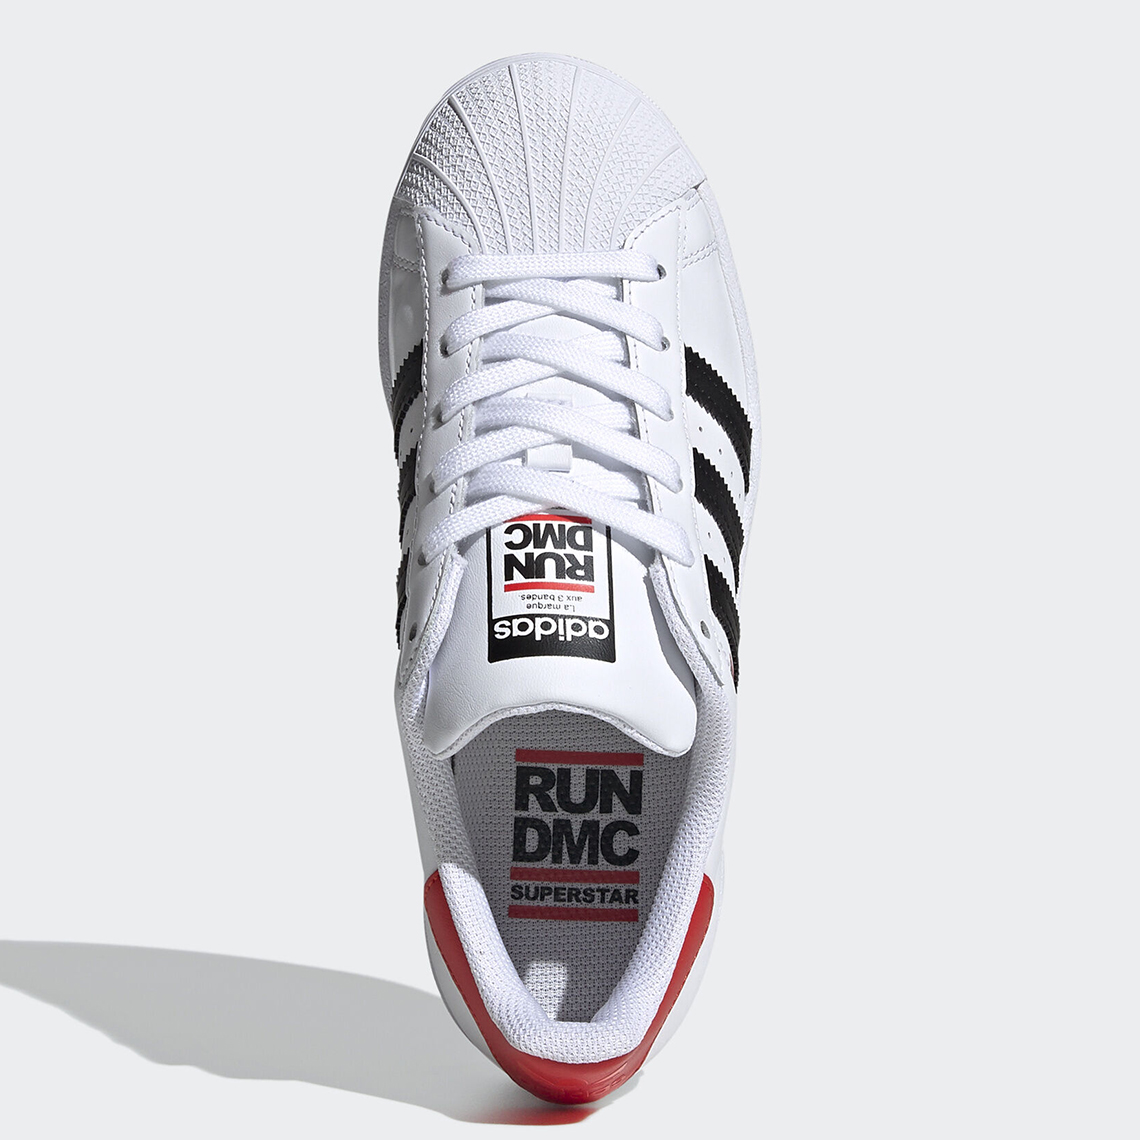 Run Dmc Adidas Superstar Fy4054 2